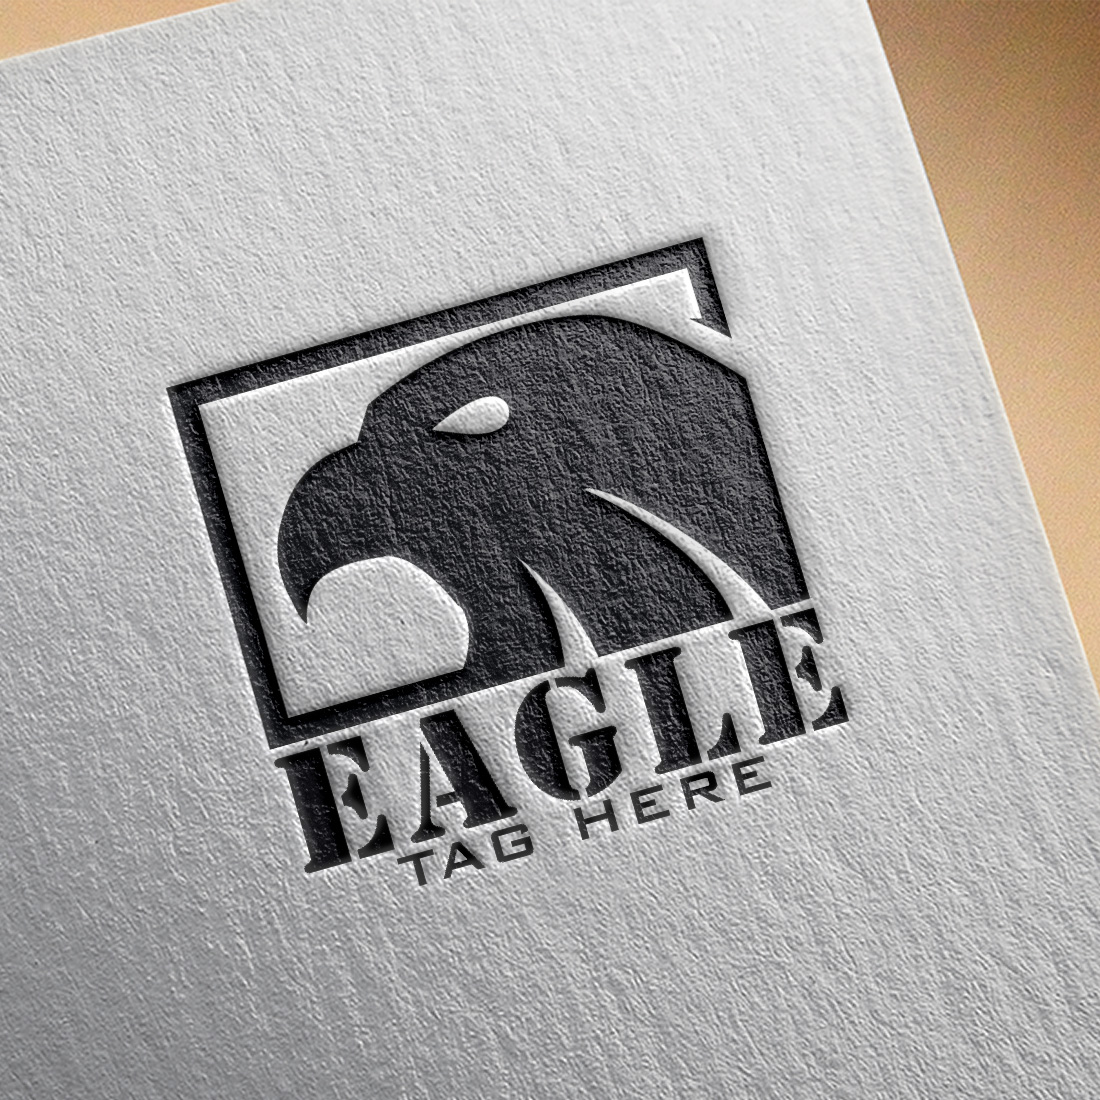 Bird-Eagle Logo Graphic Design Template cover image.